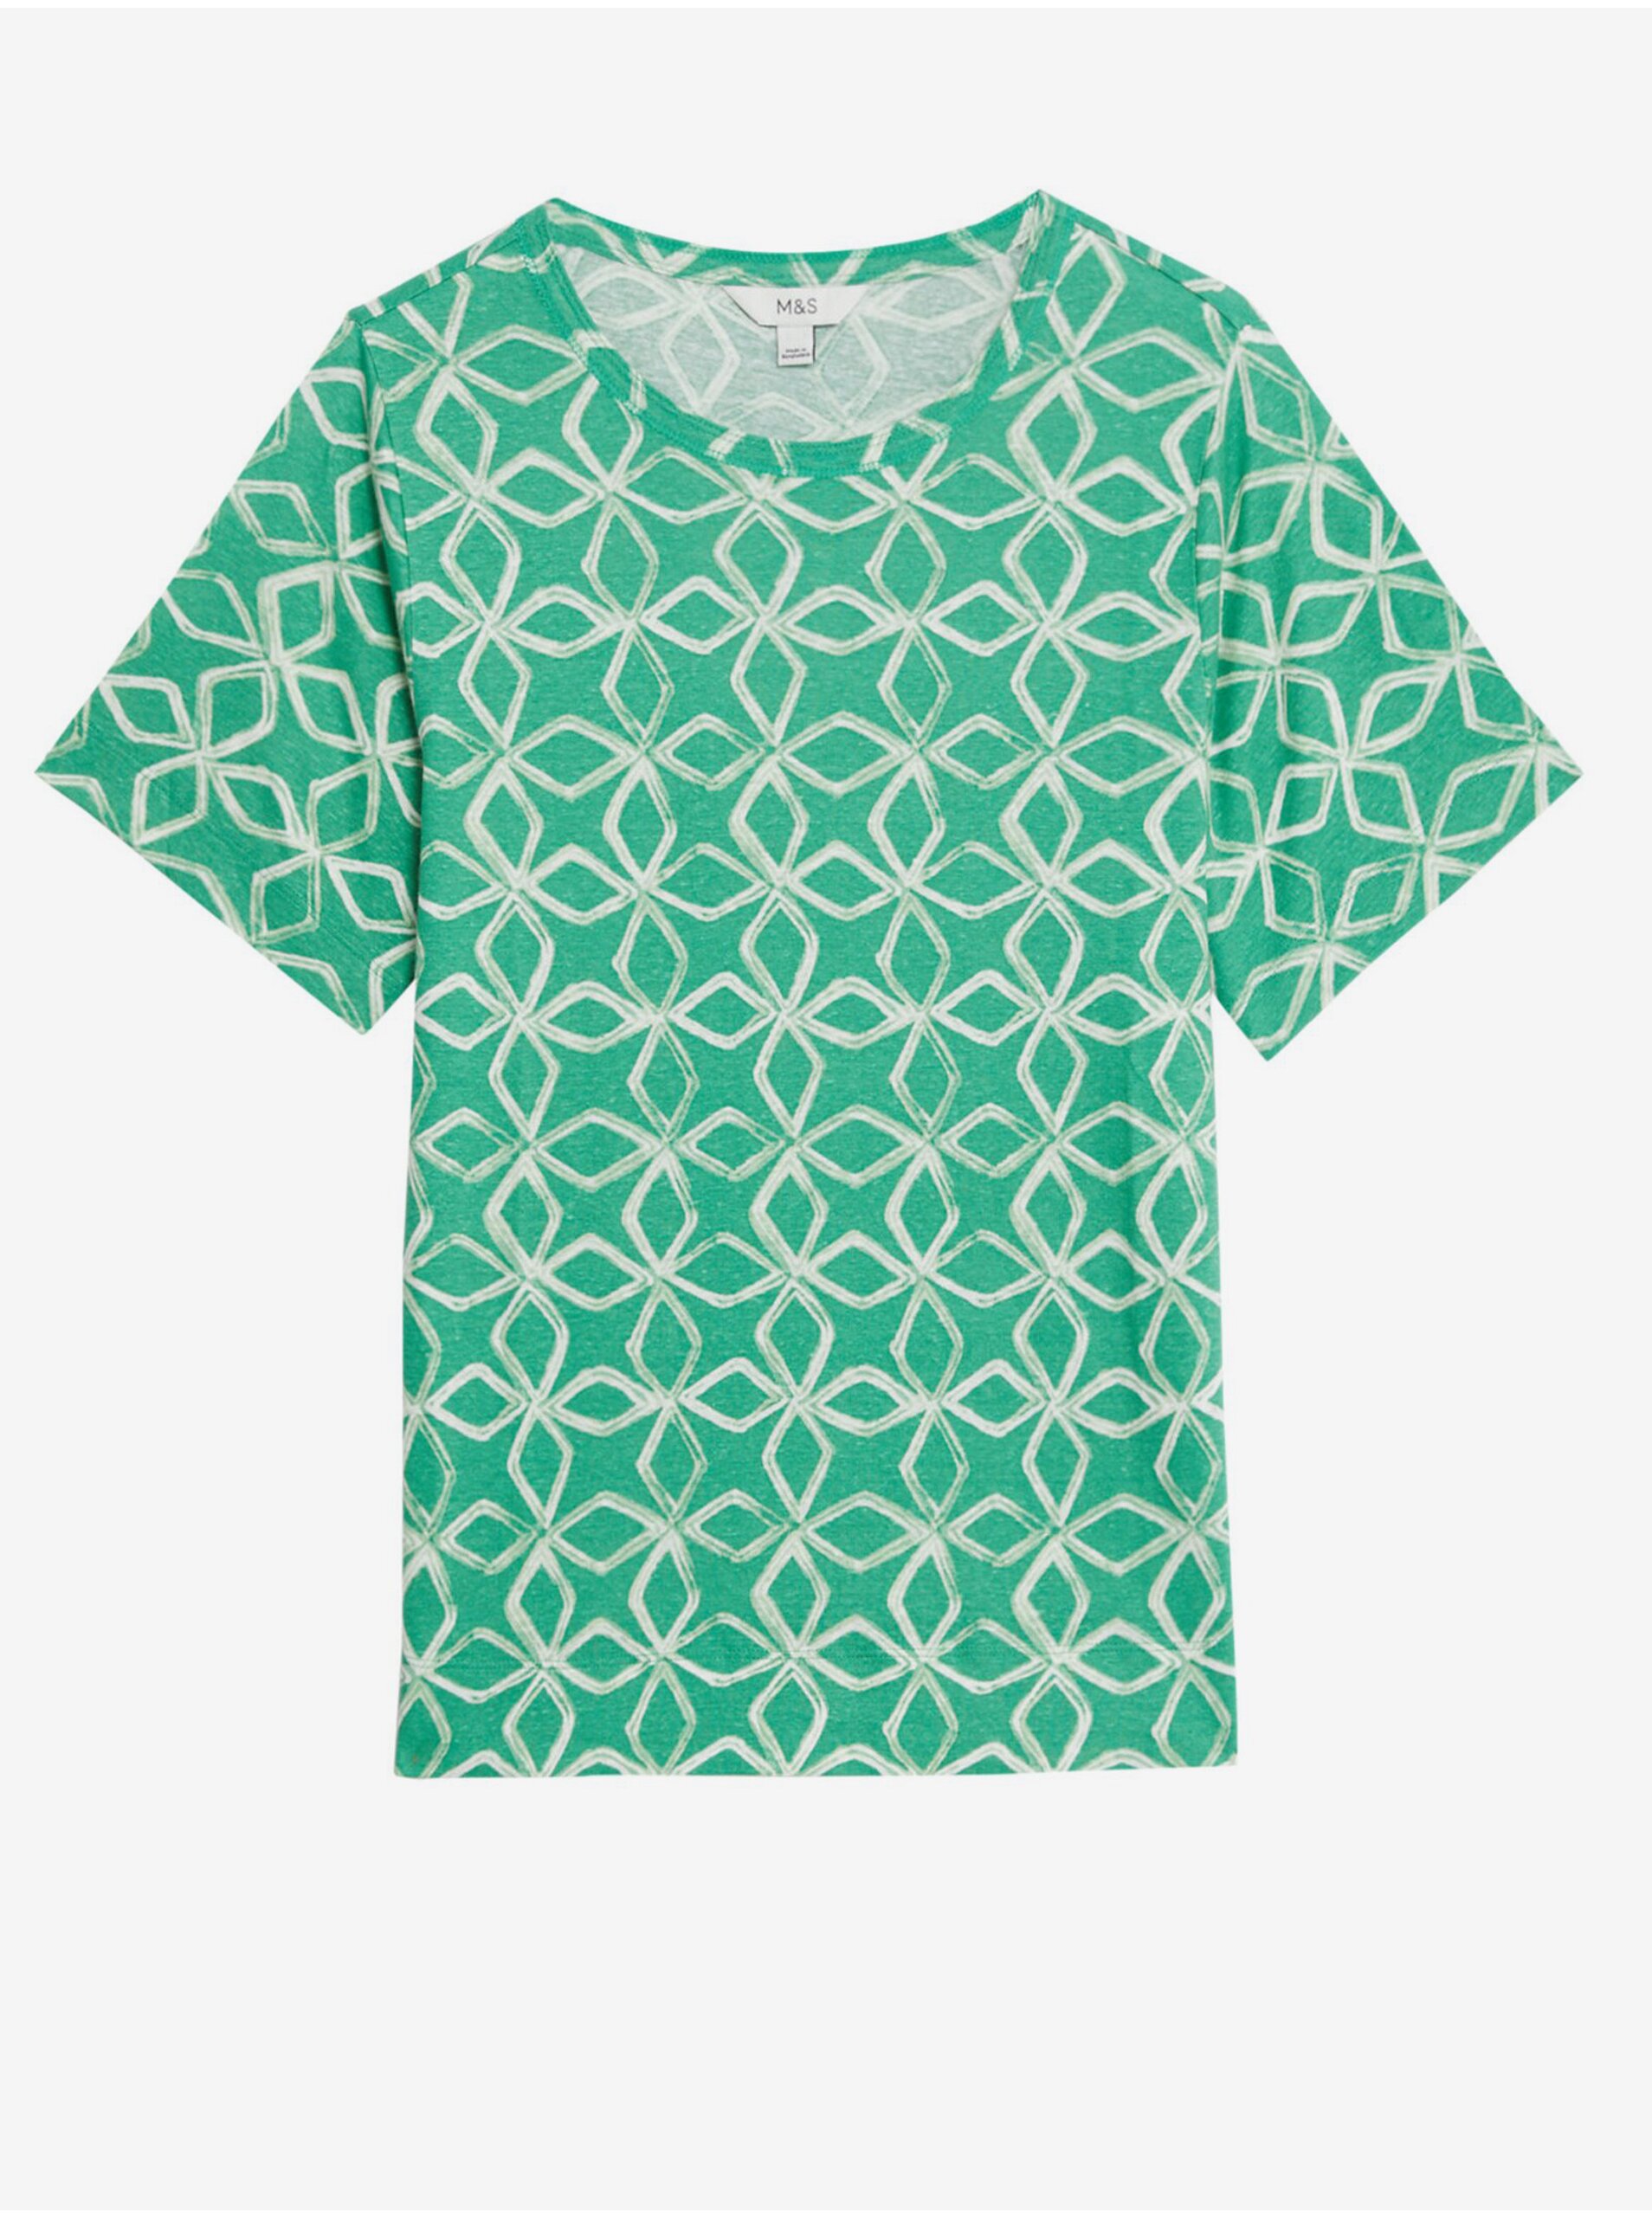 Lacno Zeleno-biele dámske tričko Marks & Spencer